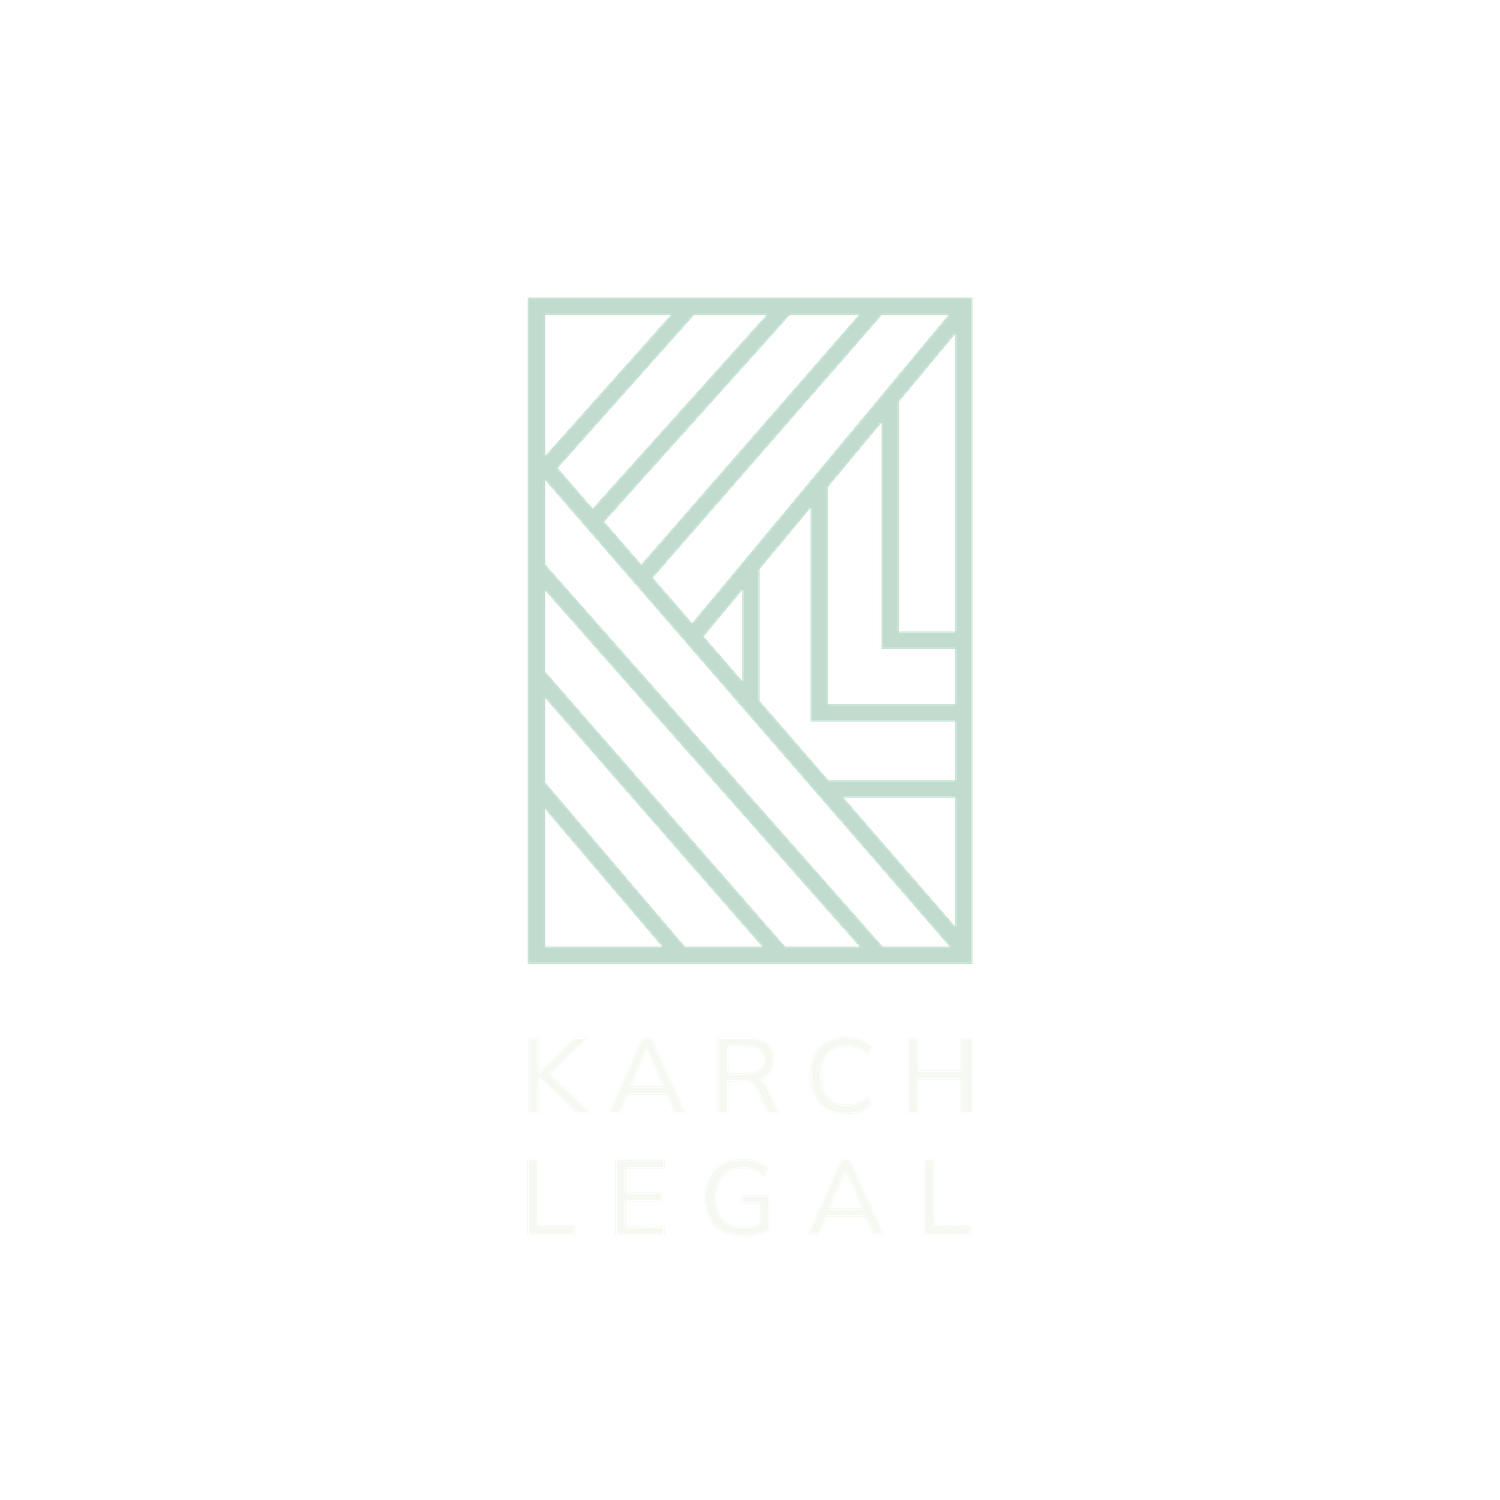 Karch Legal